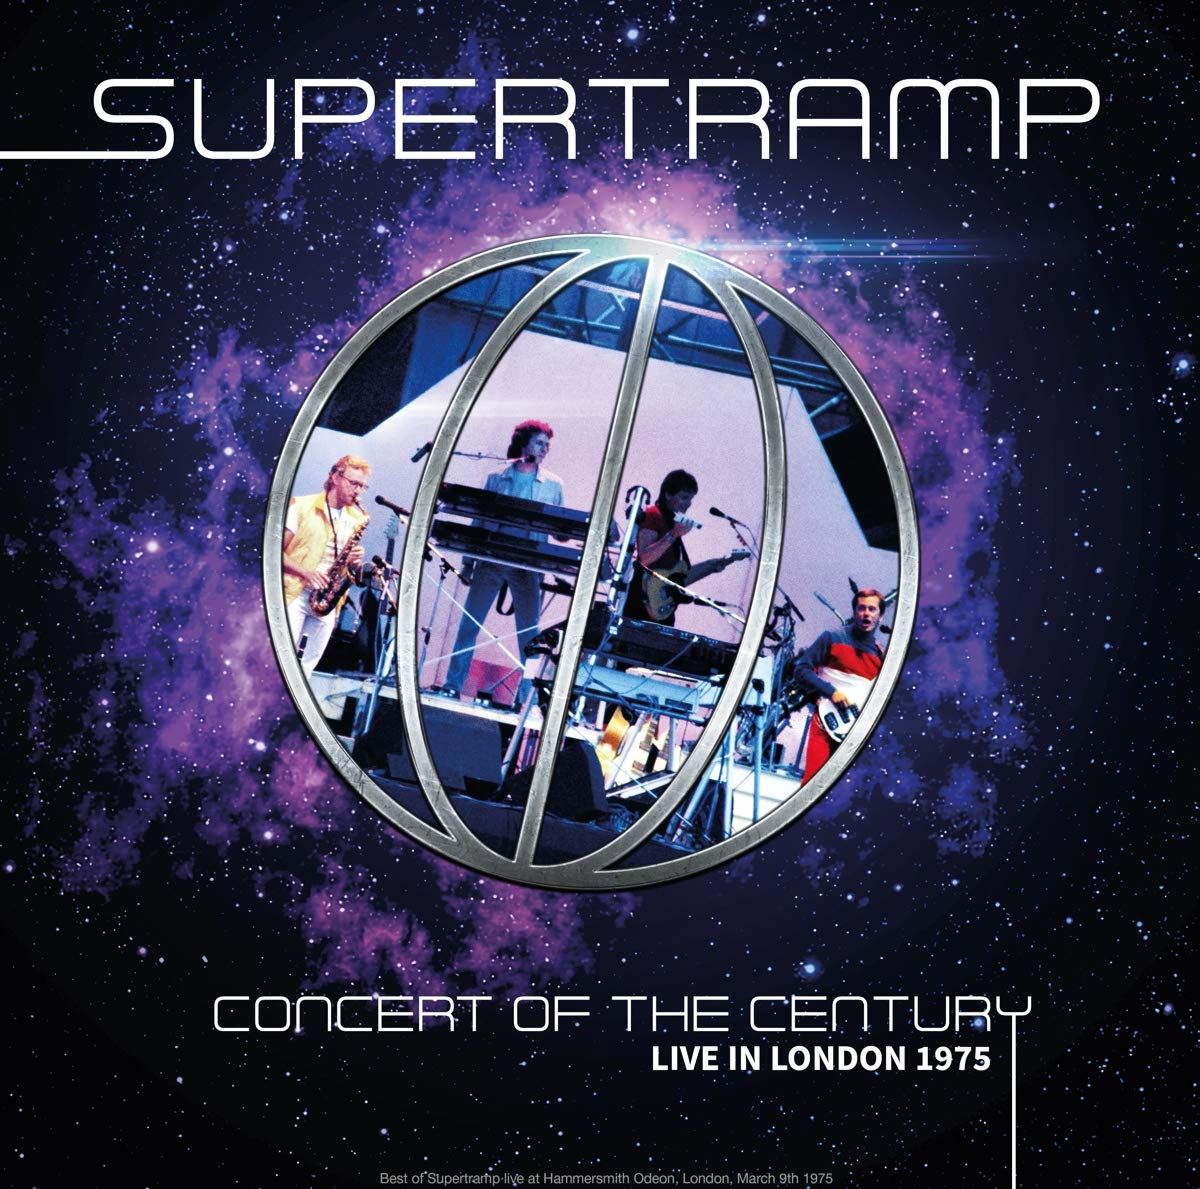 Supertramp - Concert Of The Century Live In London 1975 - Vinyl